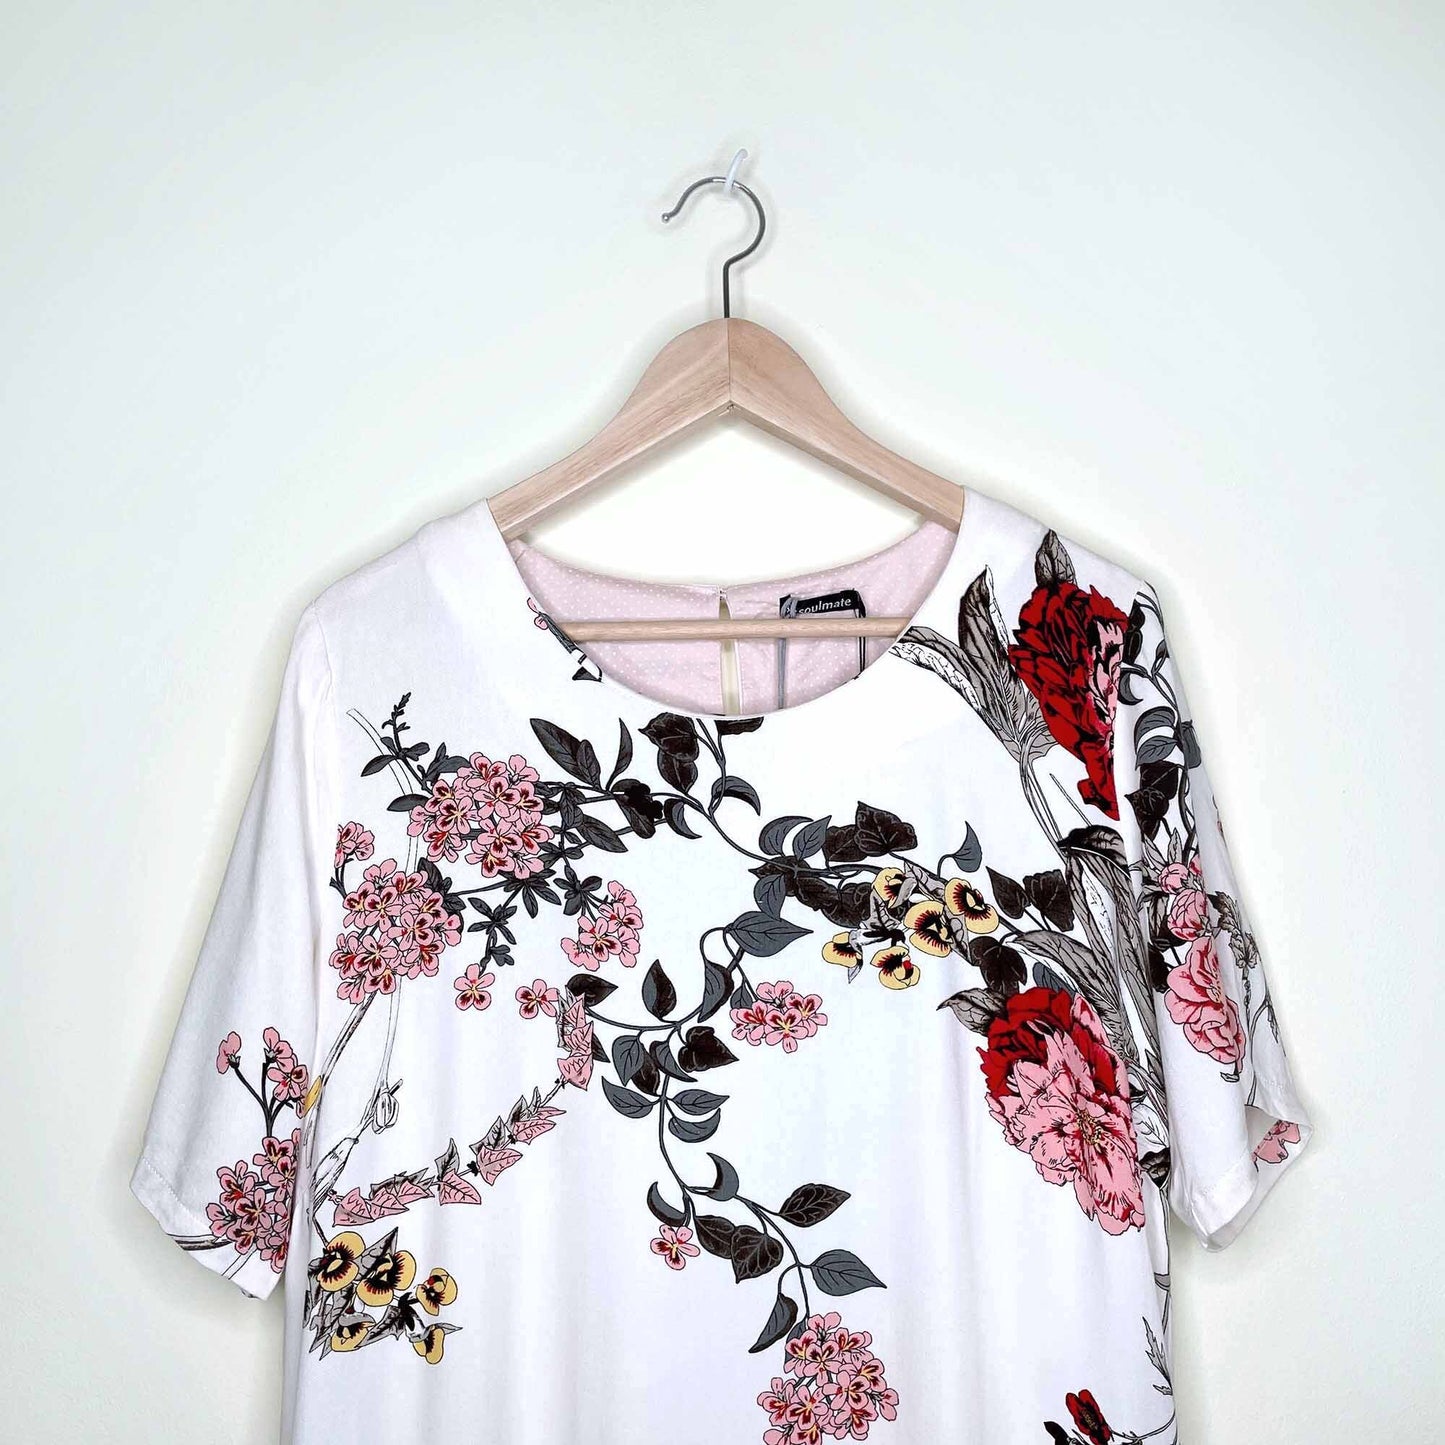 nwt soulmate pixi 2 japanese floral dress - size medium